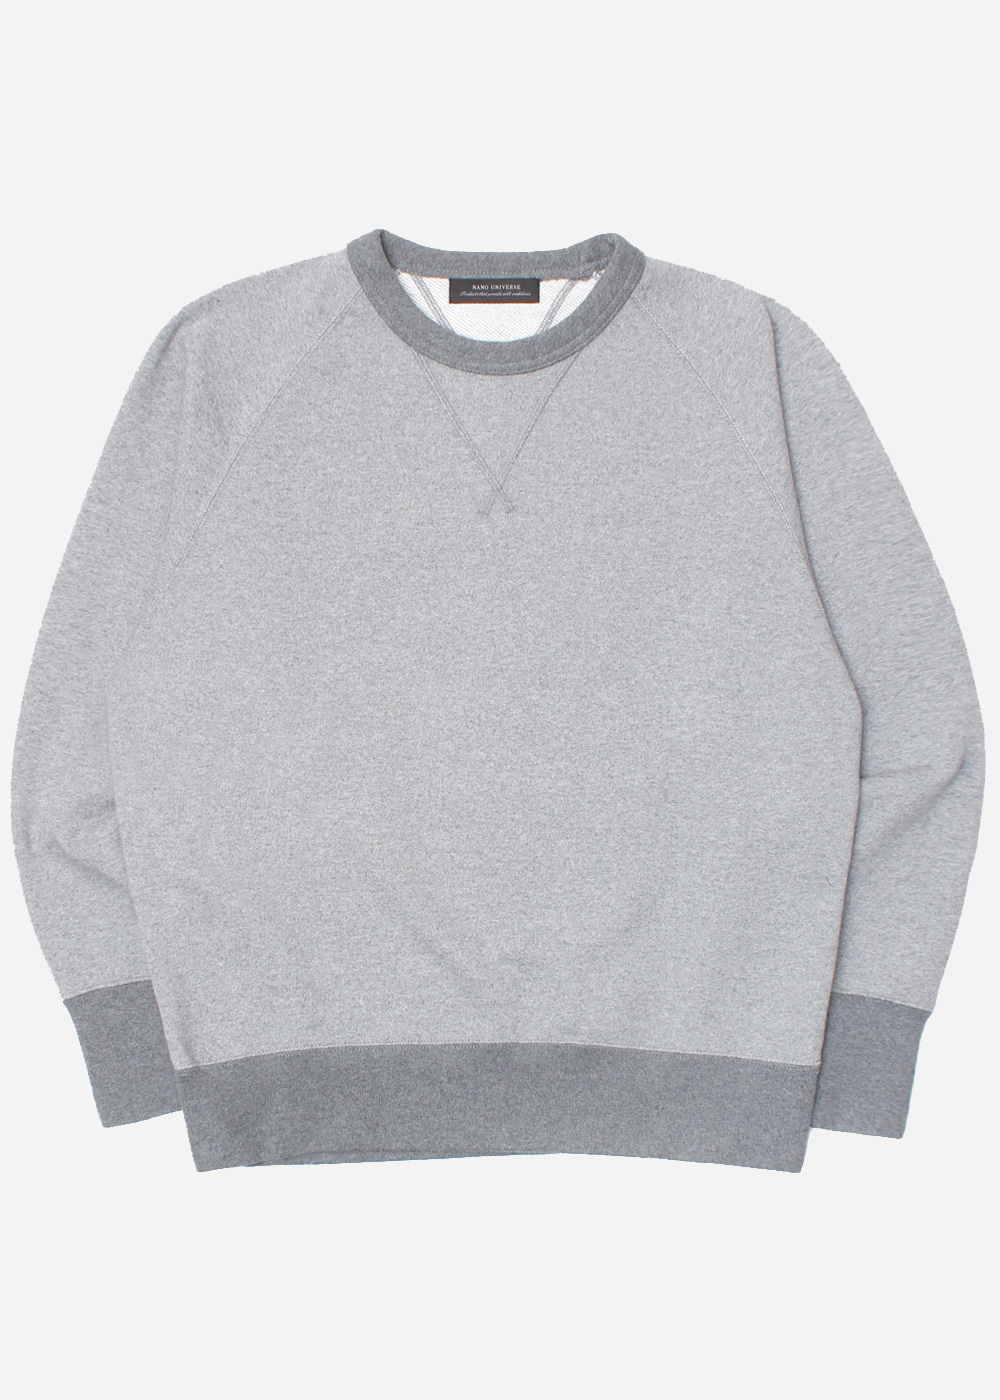 NANO UNIVERSE’over fit’stitch sweatshirt